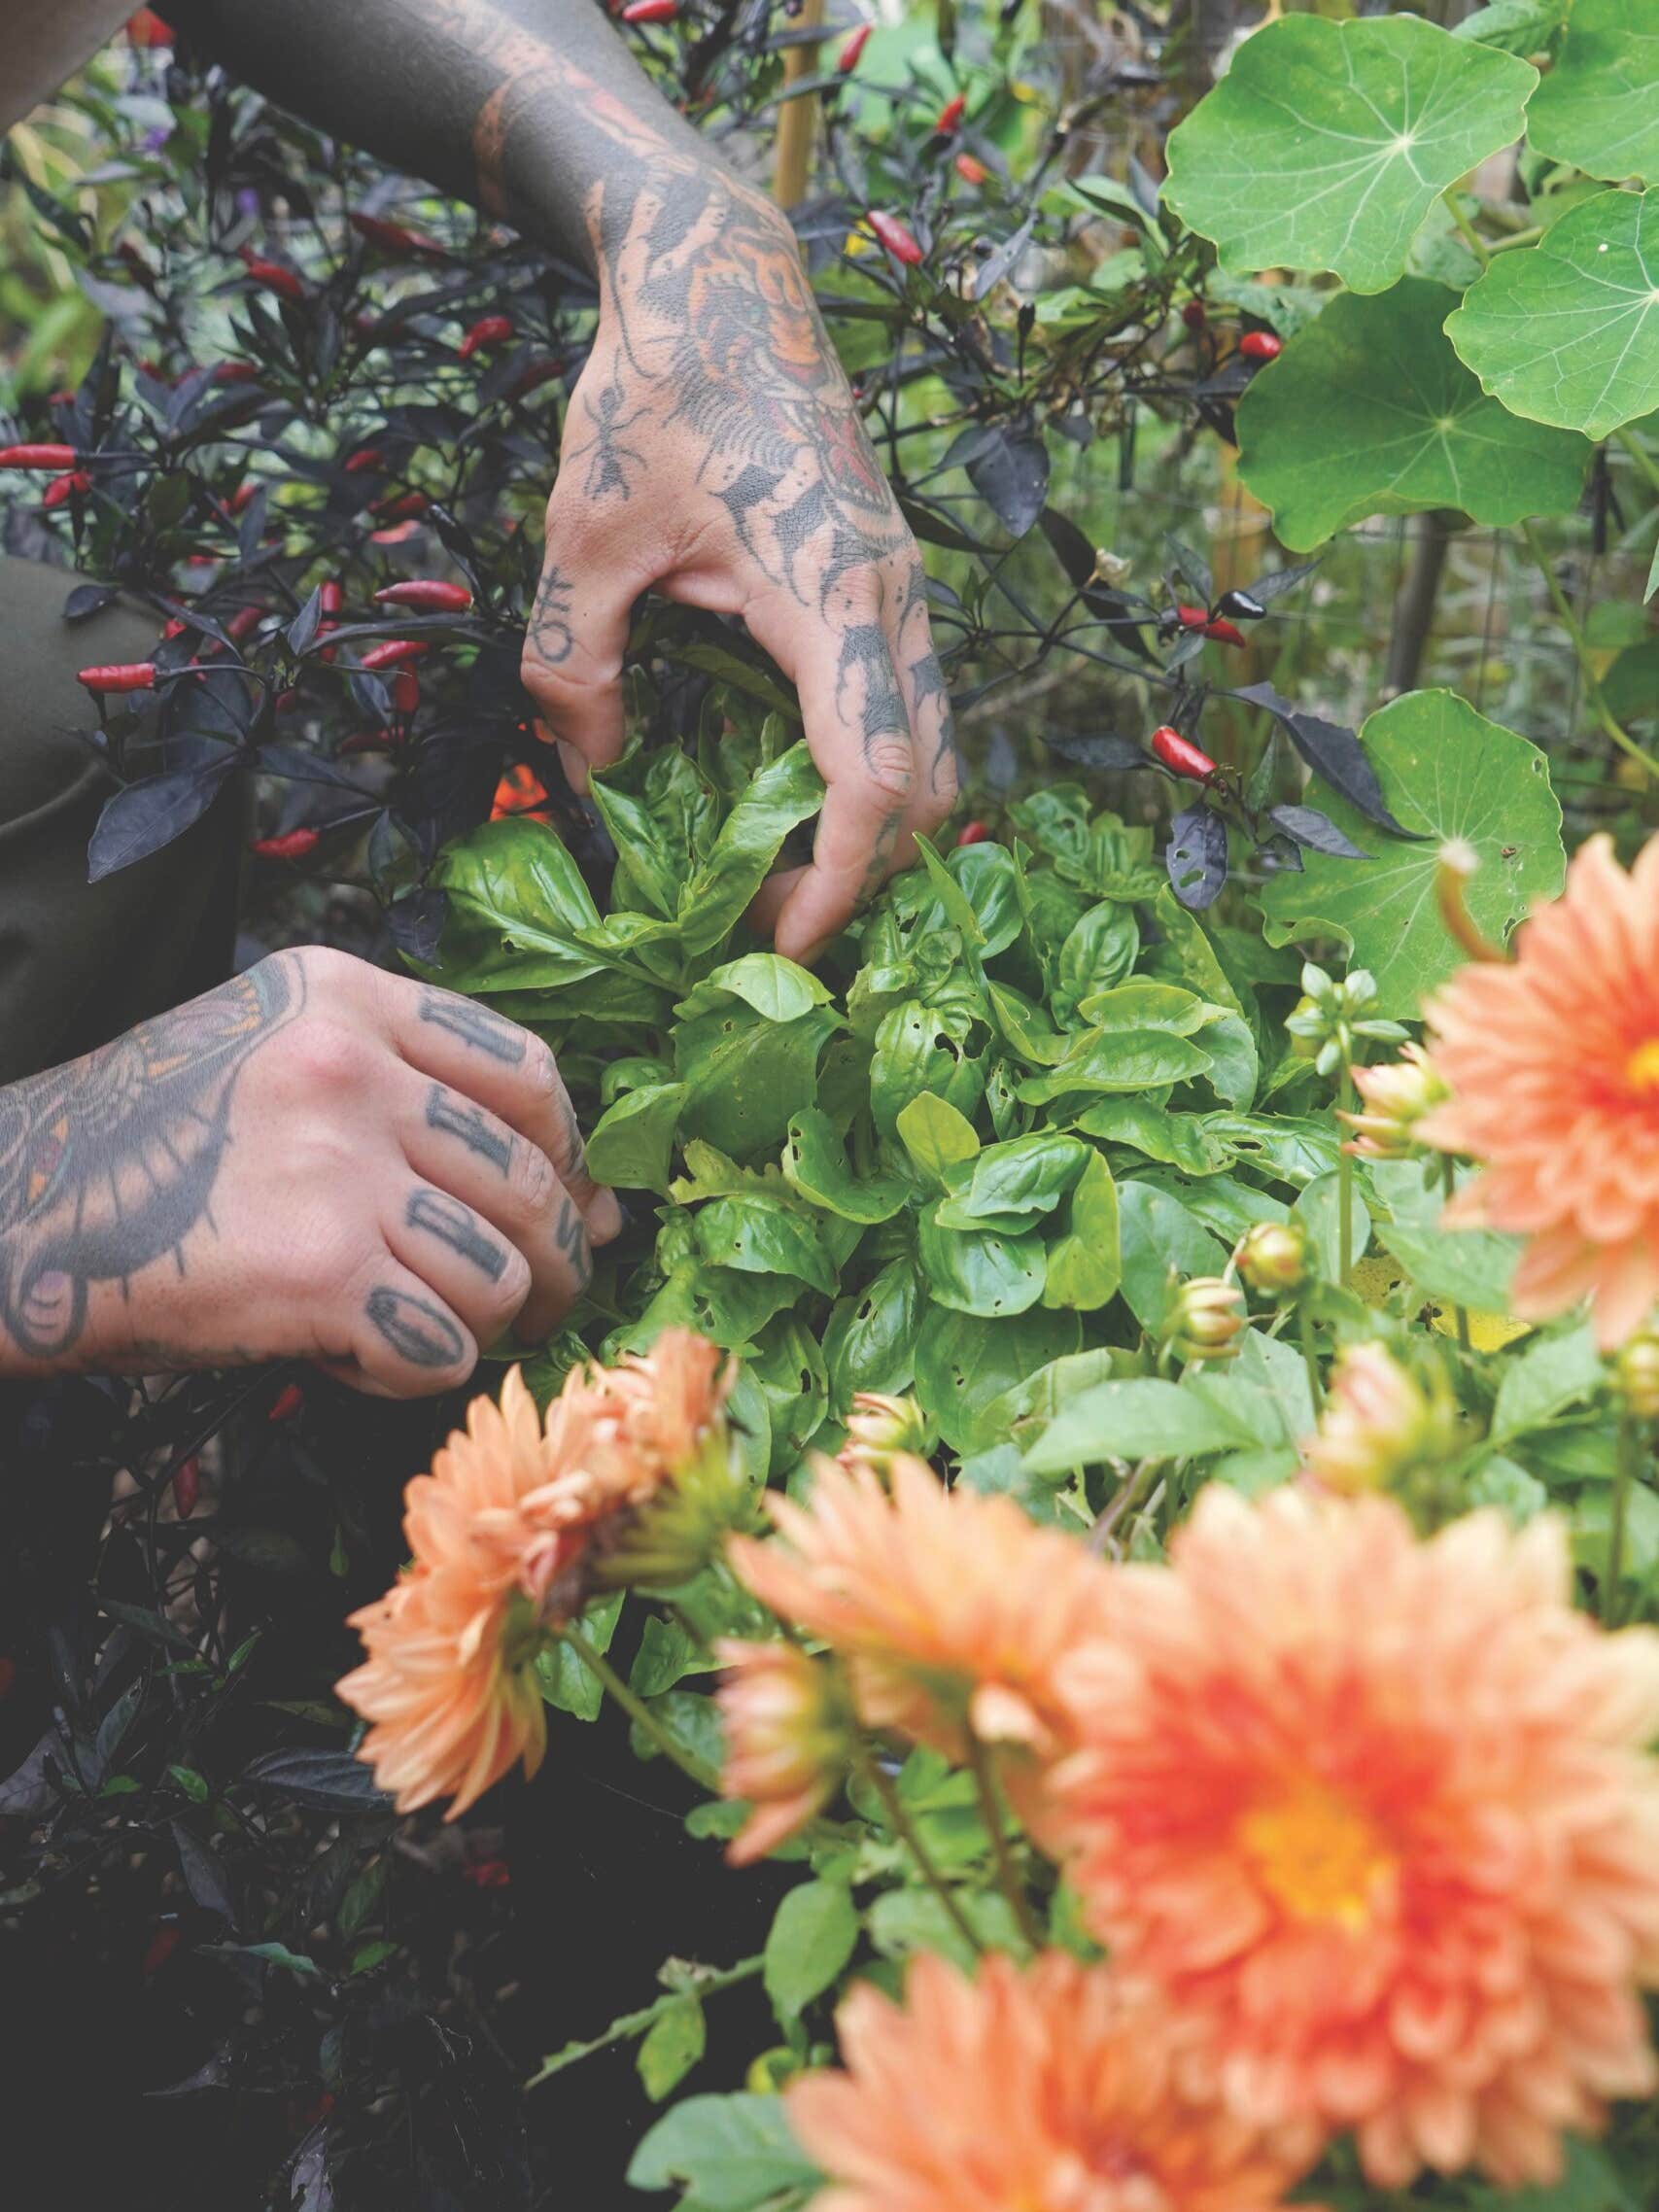 tattooed hands pruning flowers